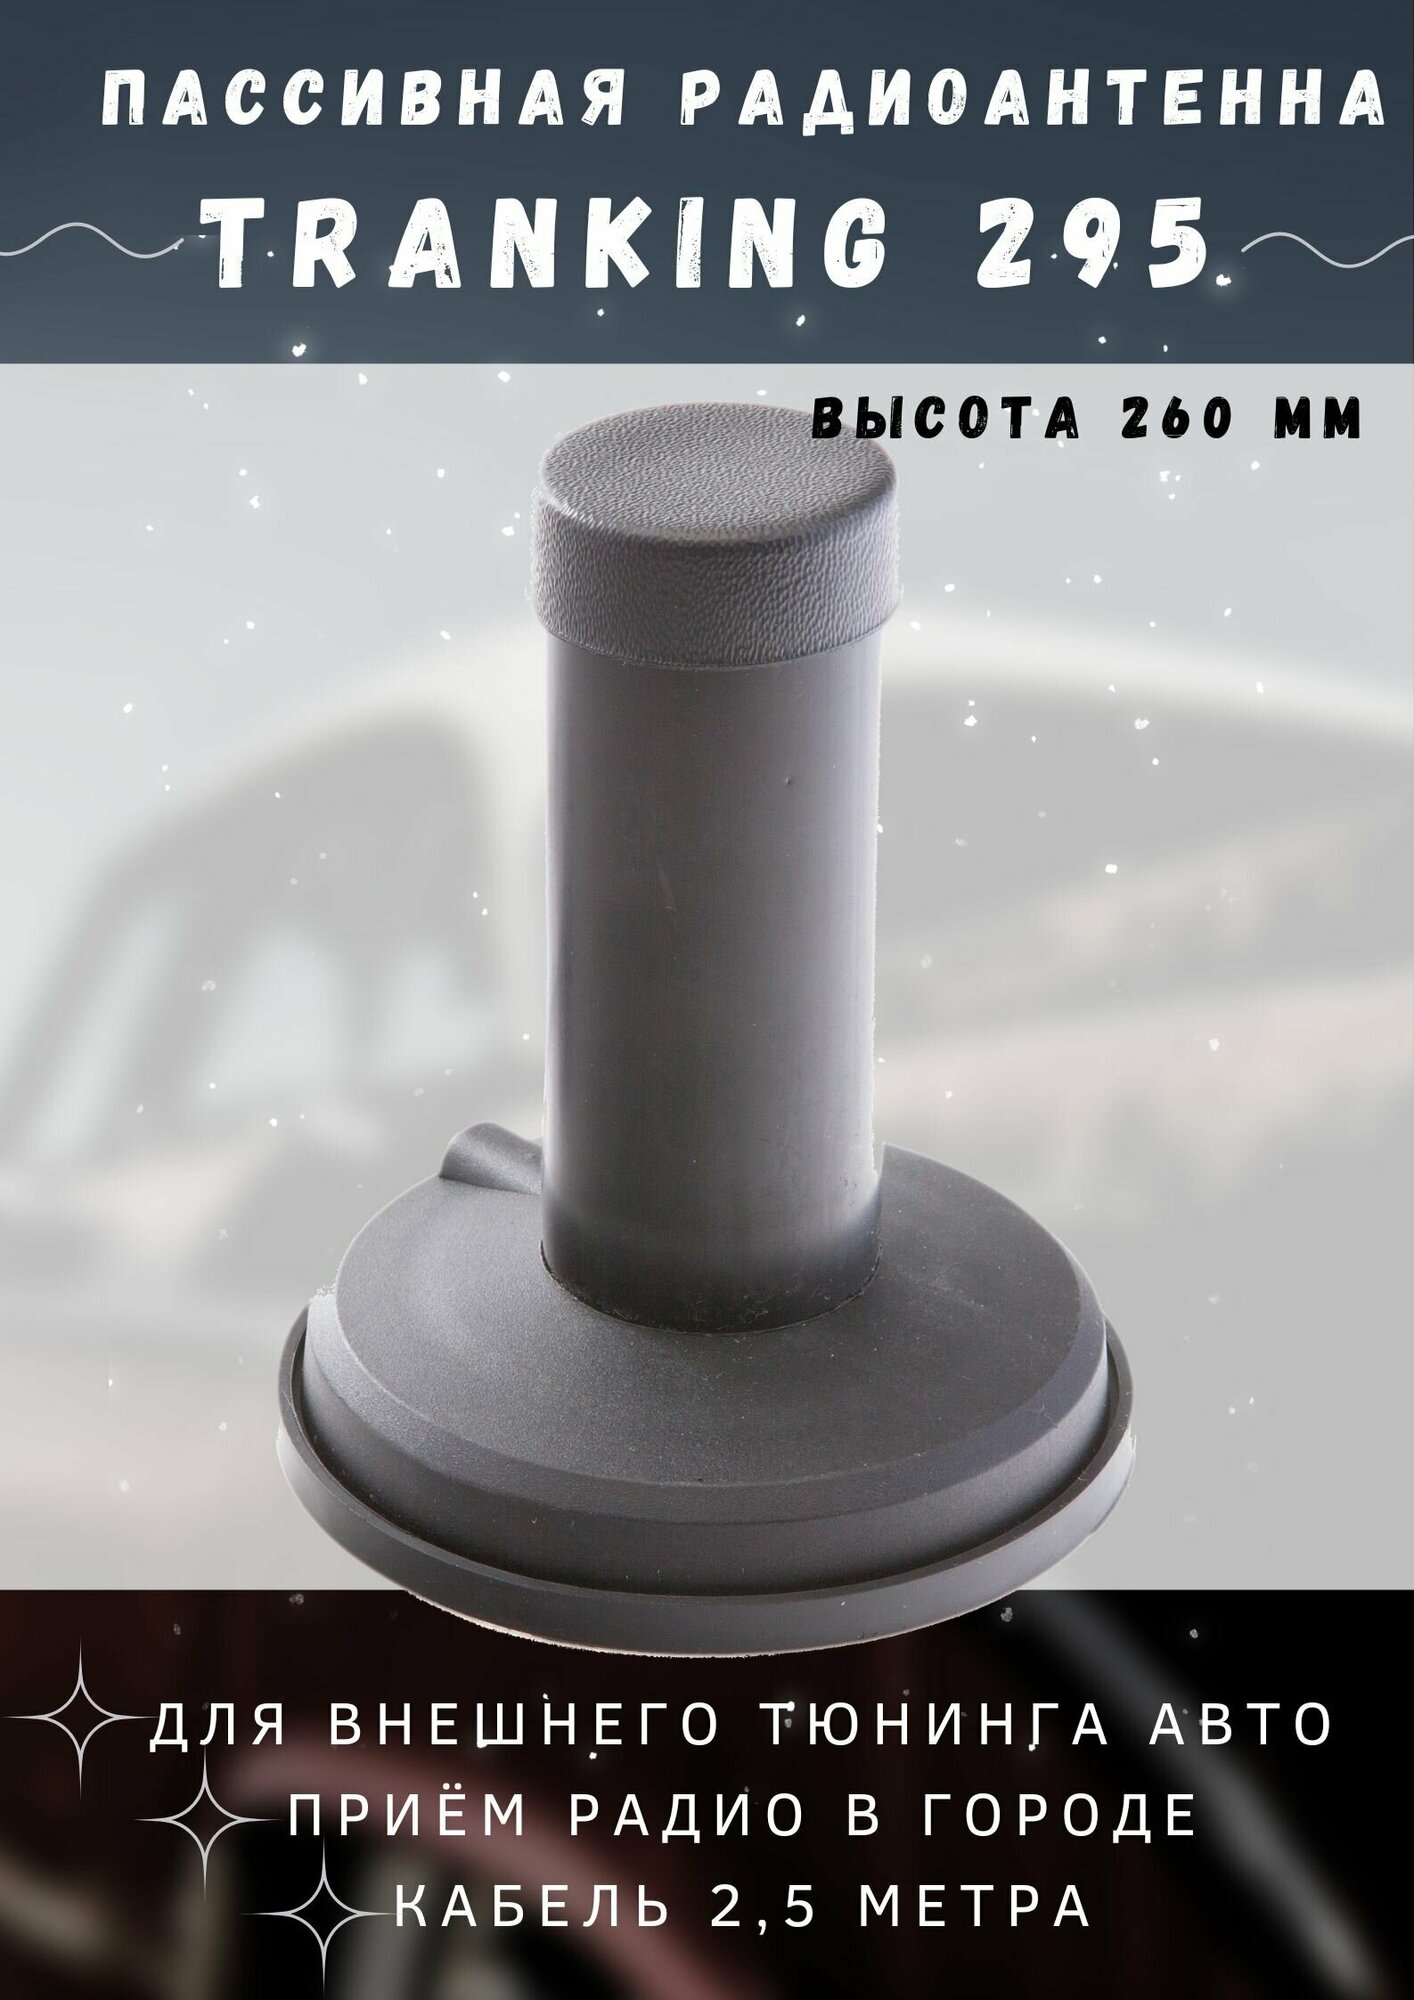 Декоративная антенна Рожки для автомобиля Tranking-295 магнитная, 1 штука в комплекте